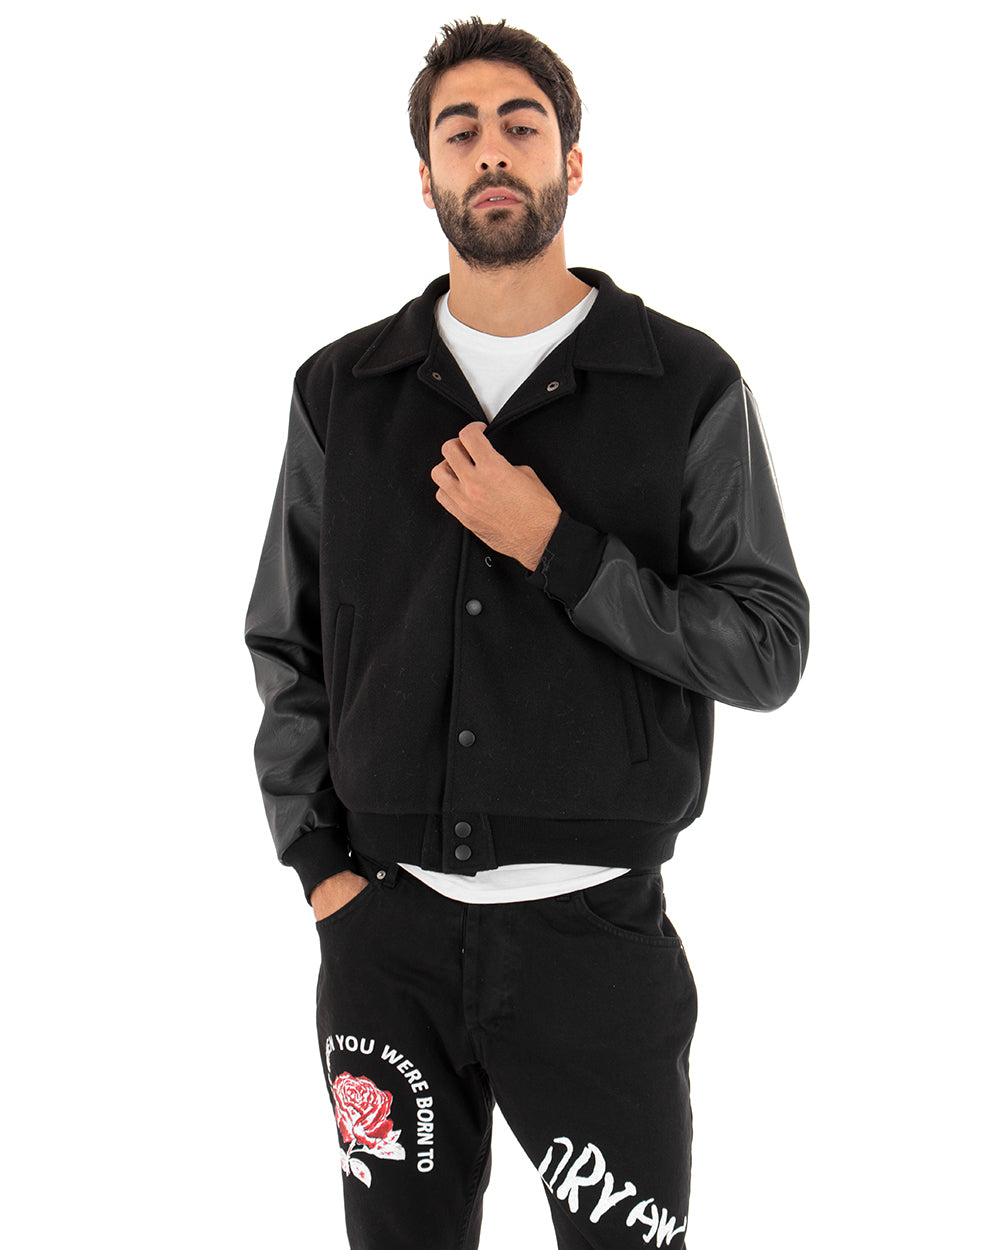 Men's Long Sleeve Solid Color Black Jacket Casual Sweatshirt Jacket GIOSAL